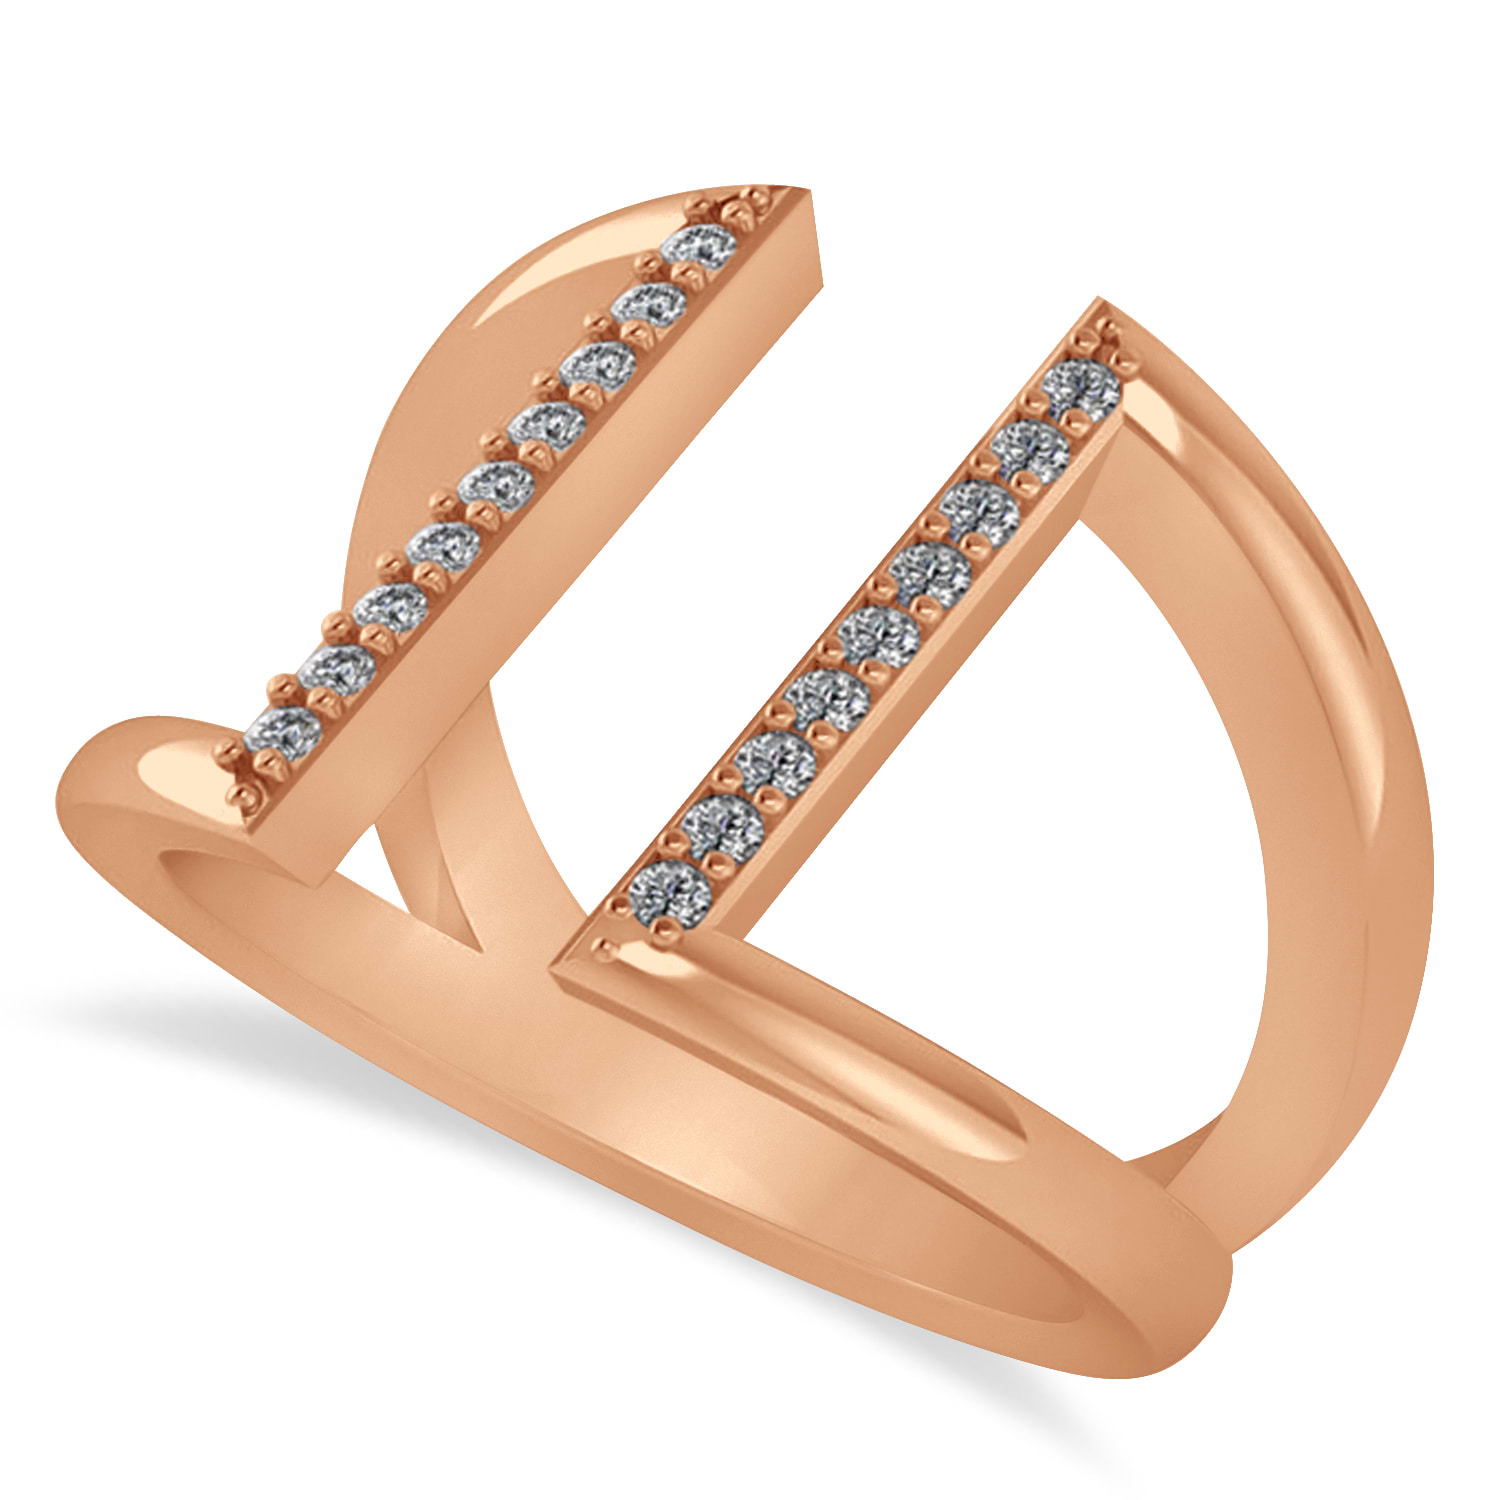 Diamond Double Bar Fashion Ring 14K Rose Gold (0.18ct)